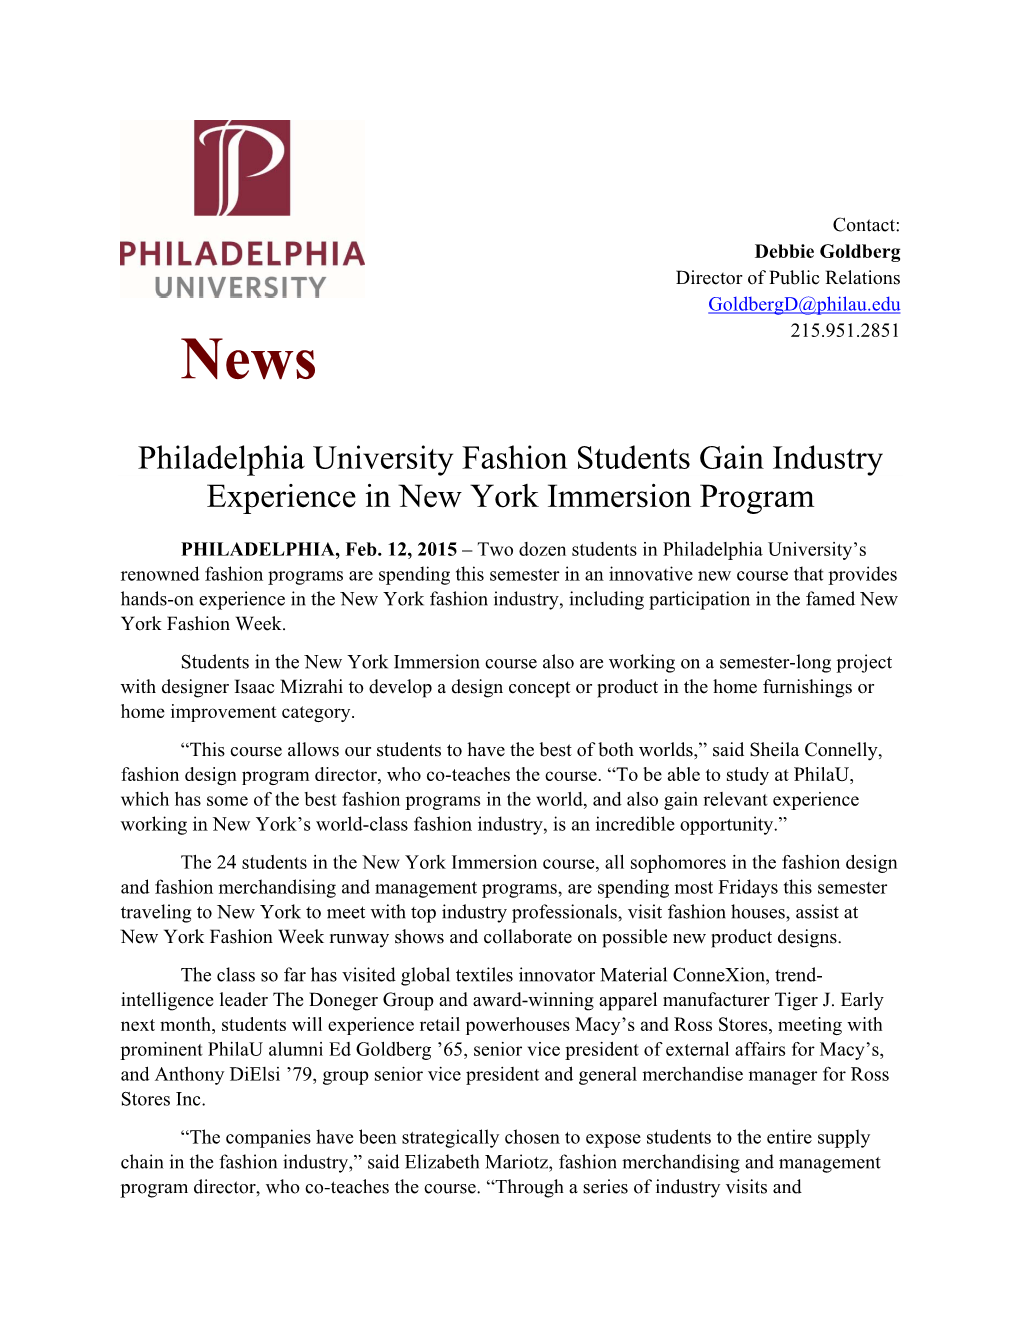 Philadelphia University Fashion Students Gain Industry Experience in New York Immersion Program